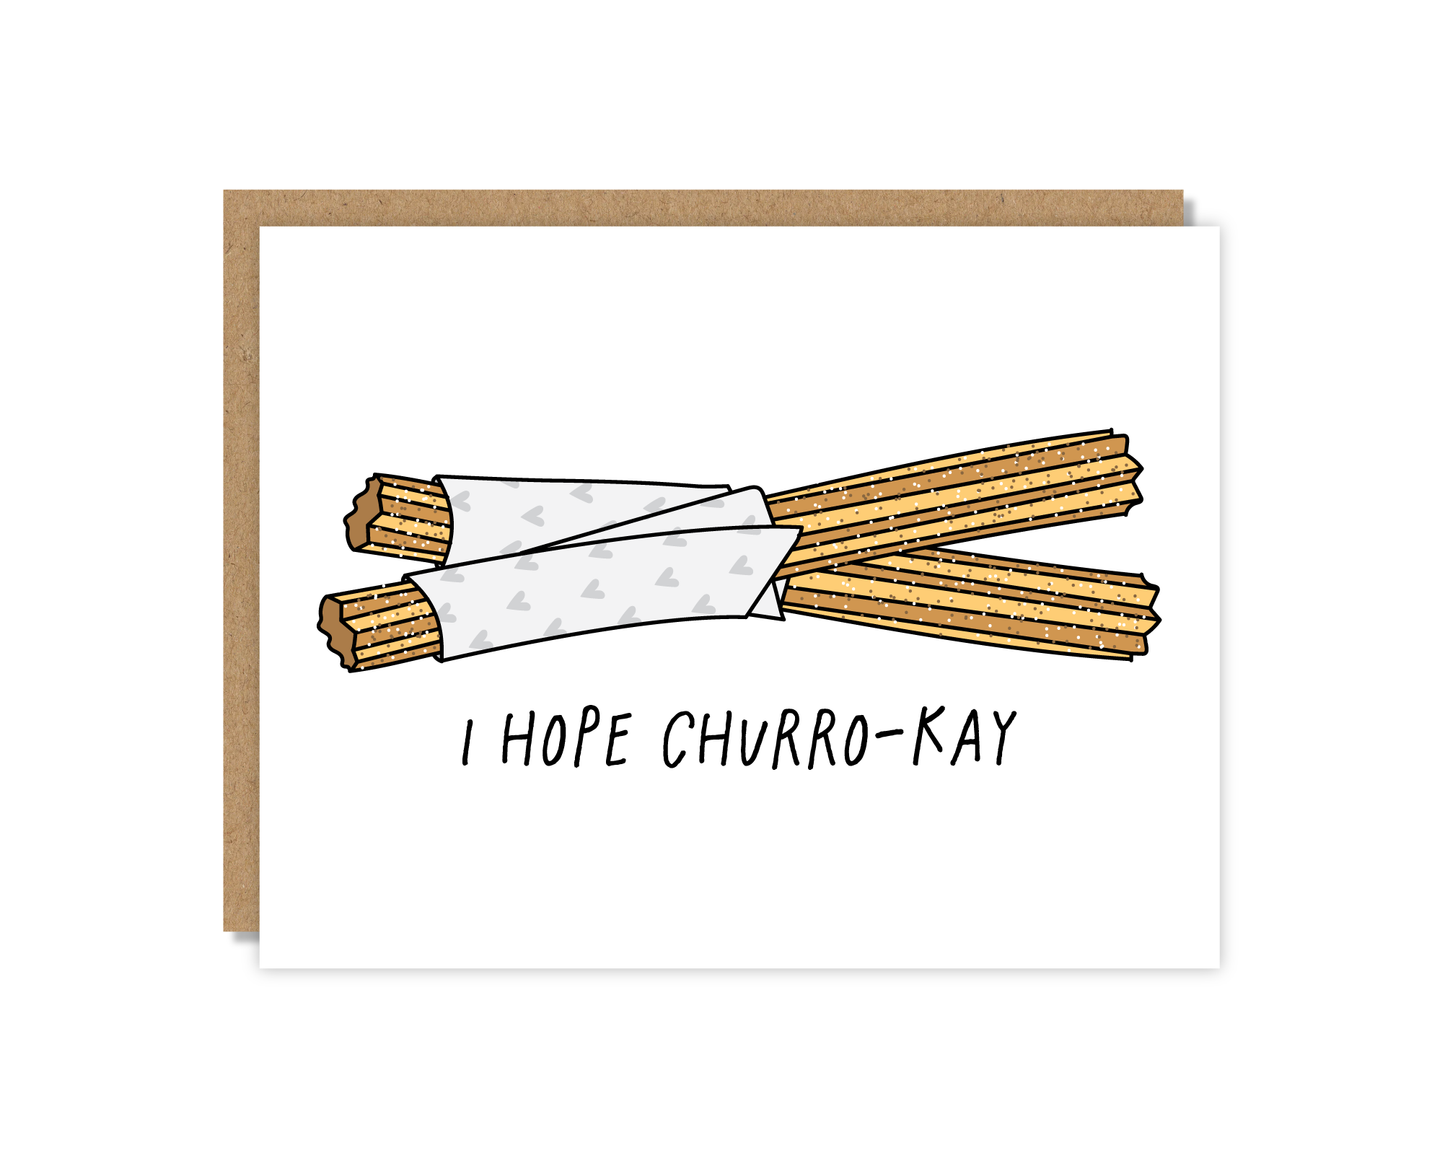 Hope Churro-Kay